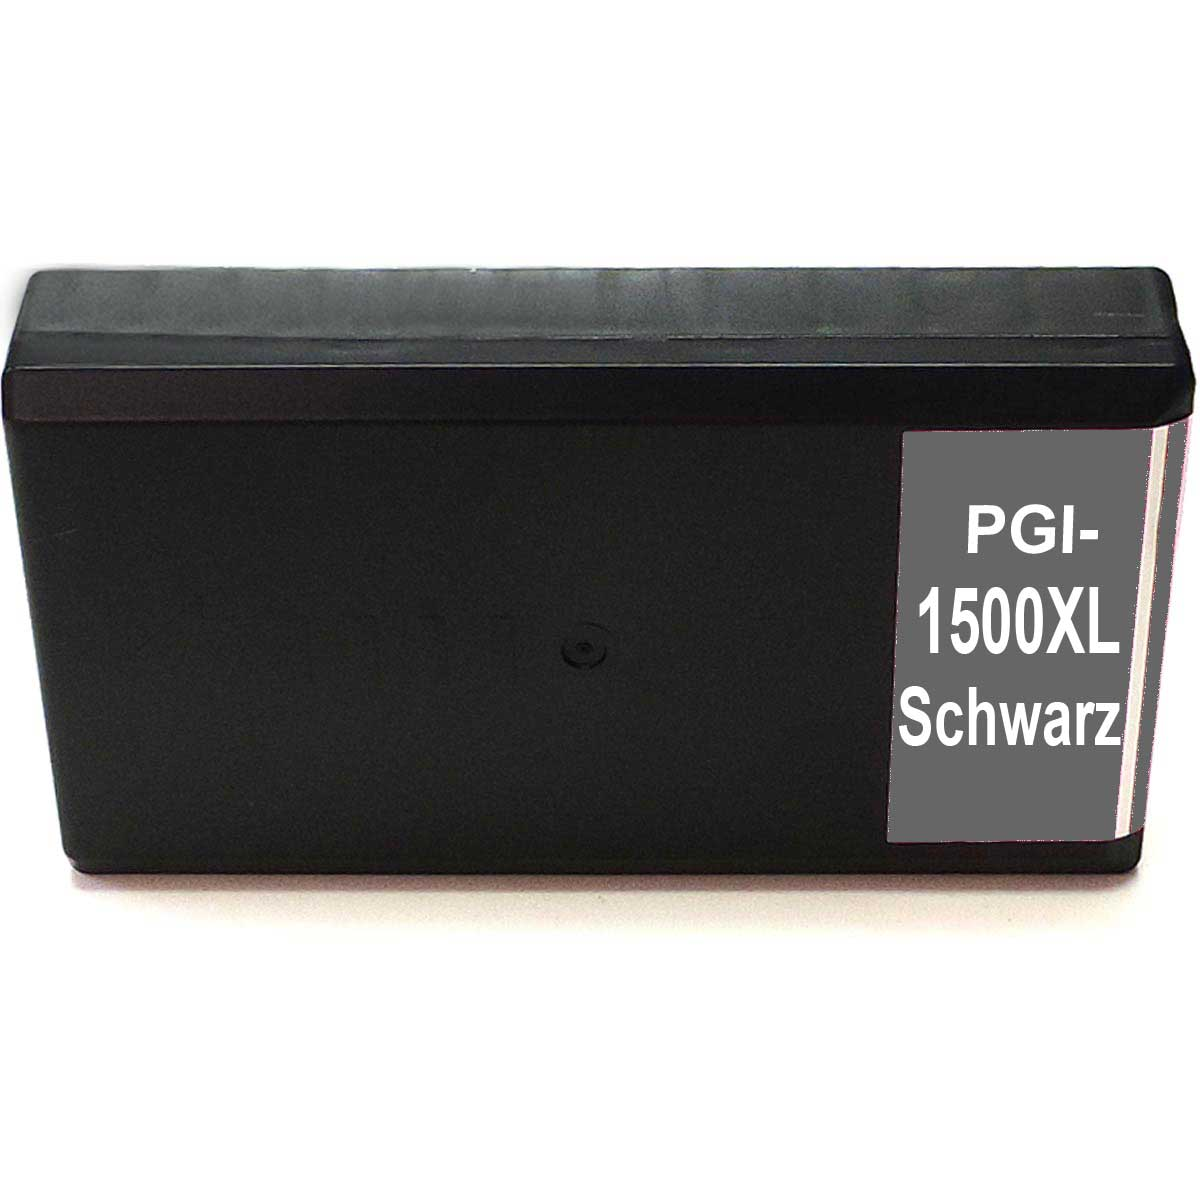 D&C PGI-1500 Schwarz 9182B001 XL, 9182B001) XL, (PGI-1500 Tintenpatrone